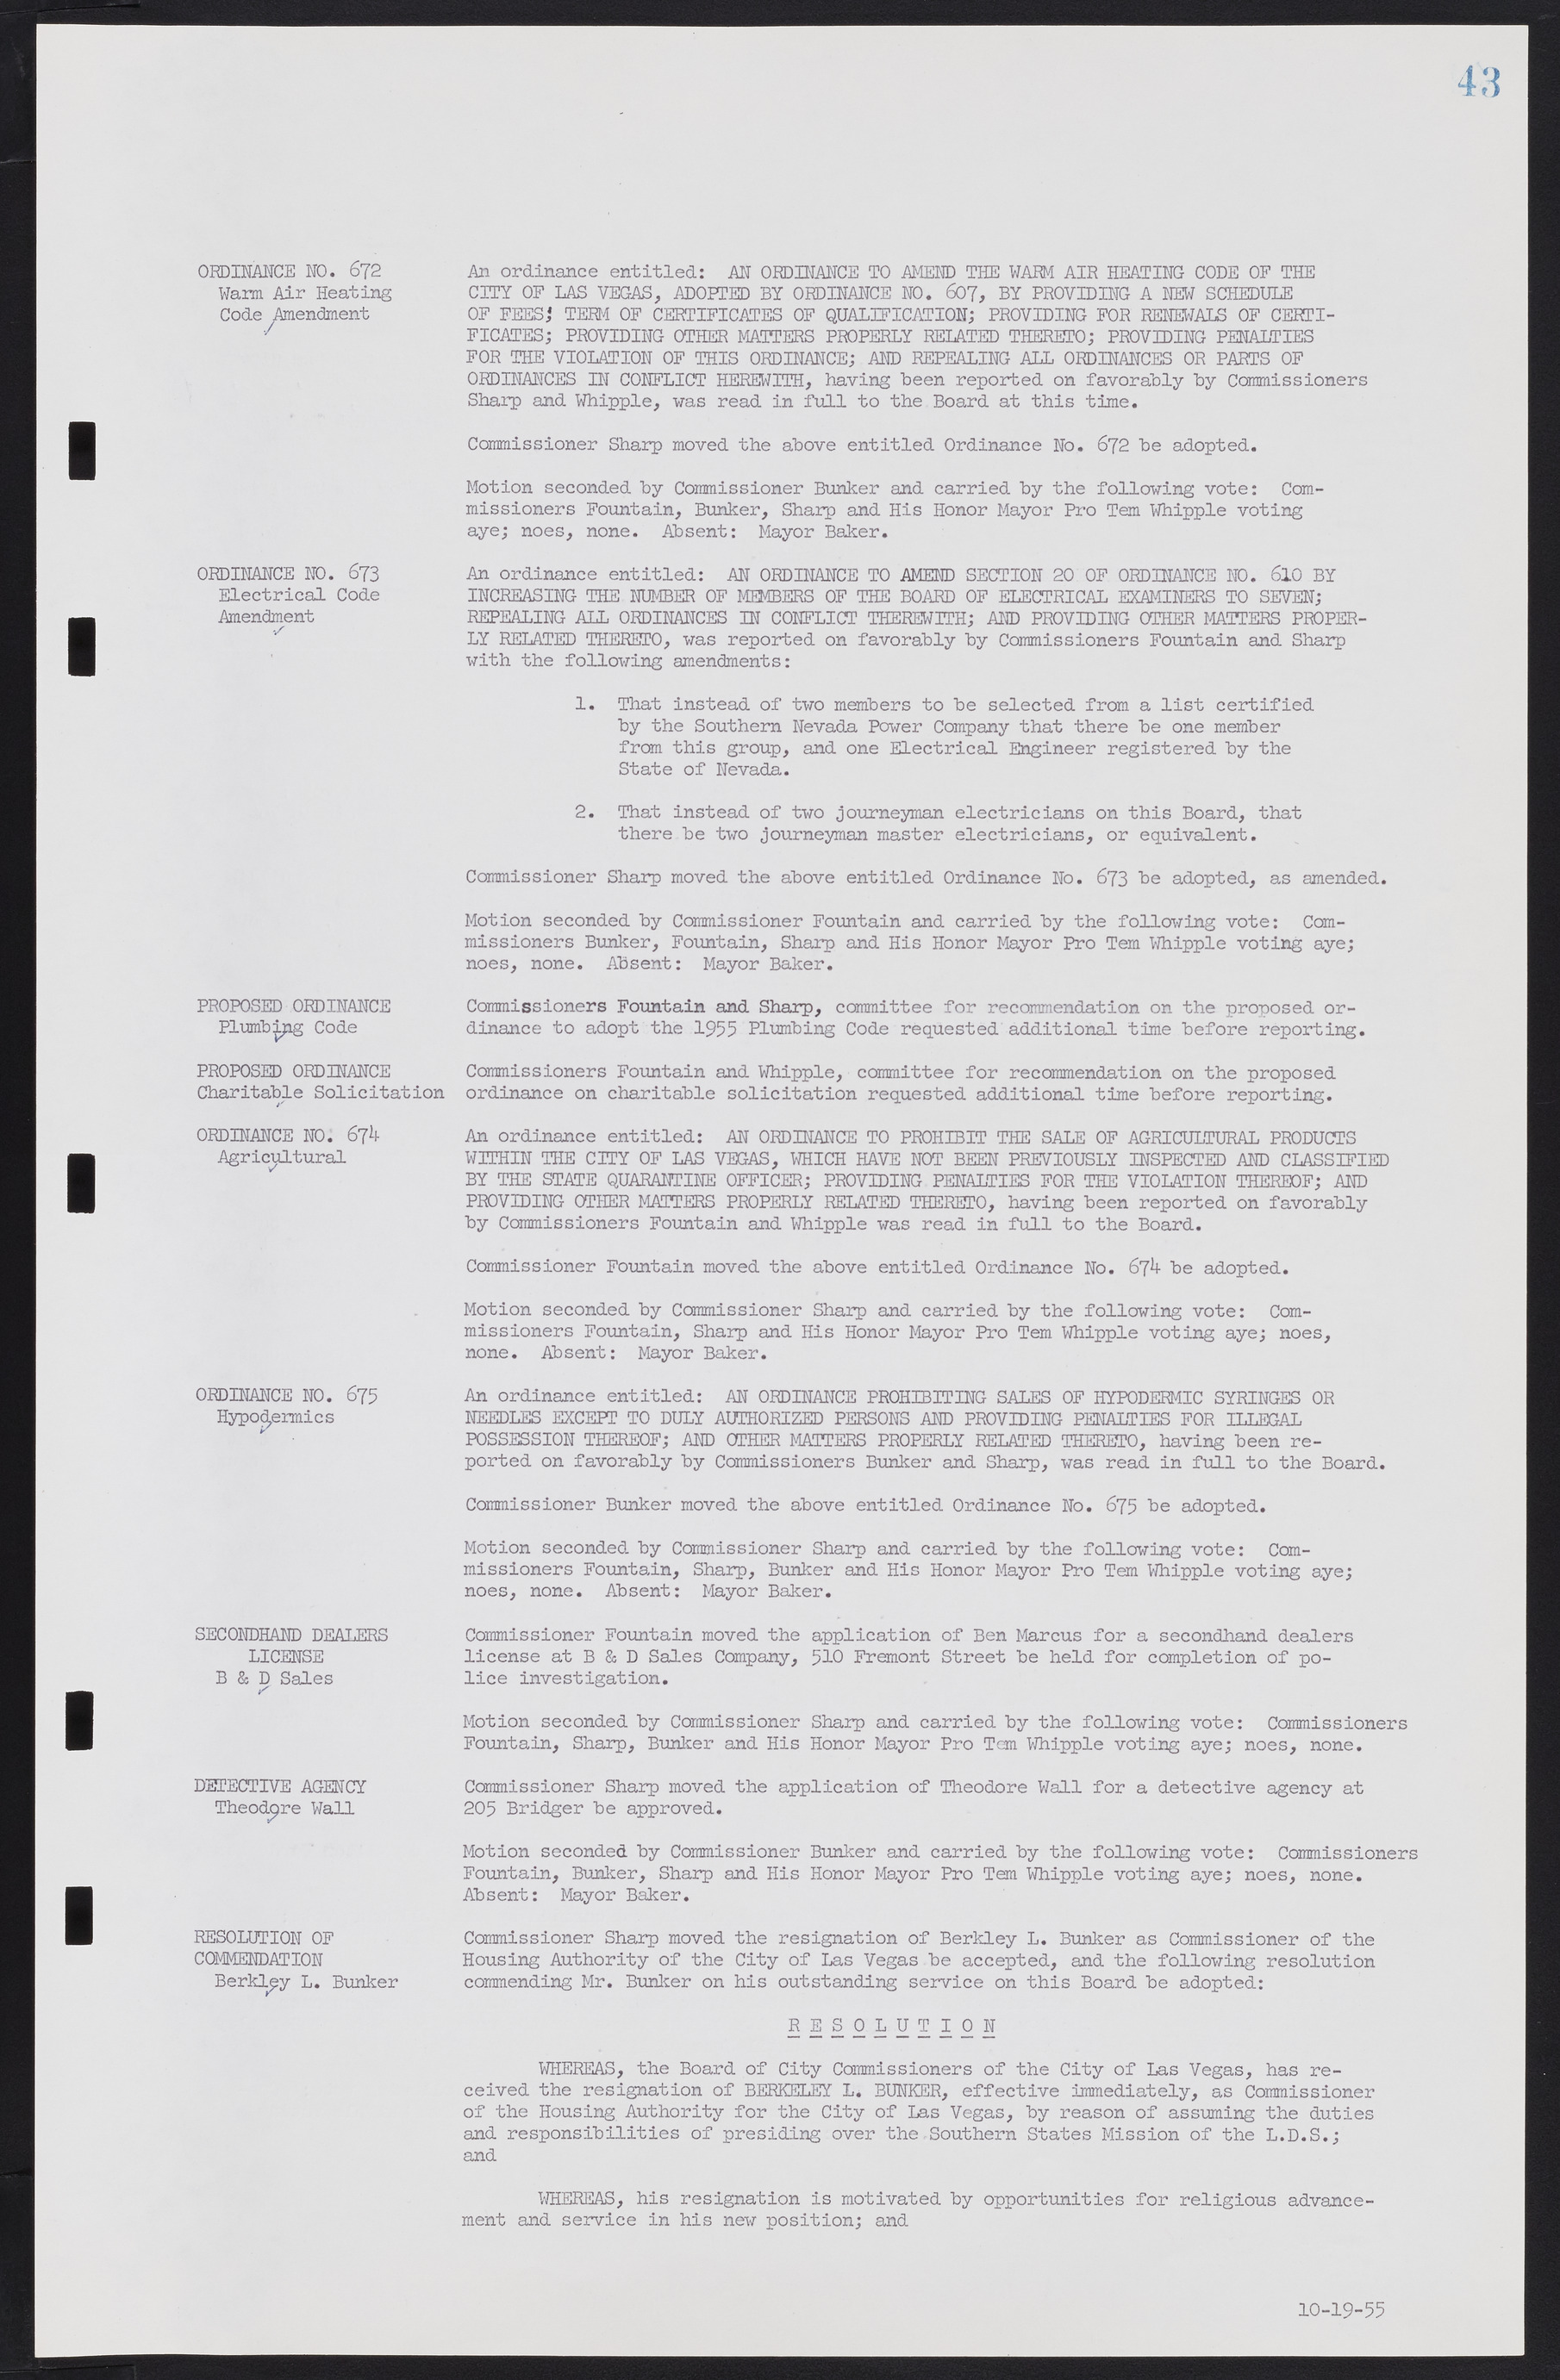 Las Vegas City Commission Minutes, September 21, 1955 to November 20, 1957, lvc000010-49